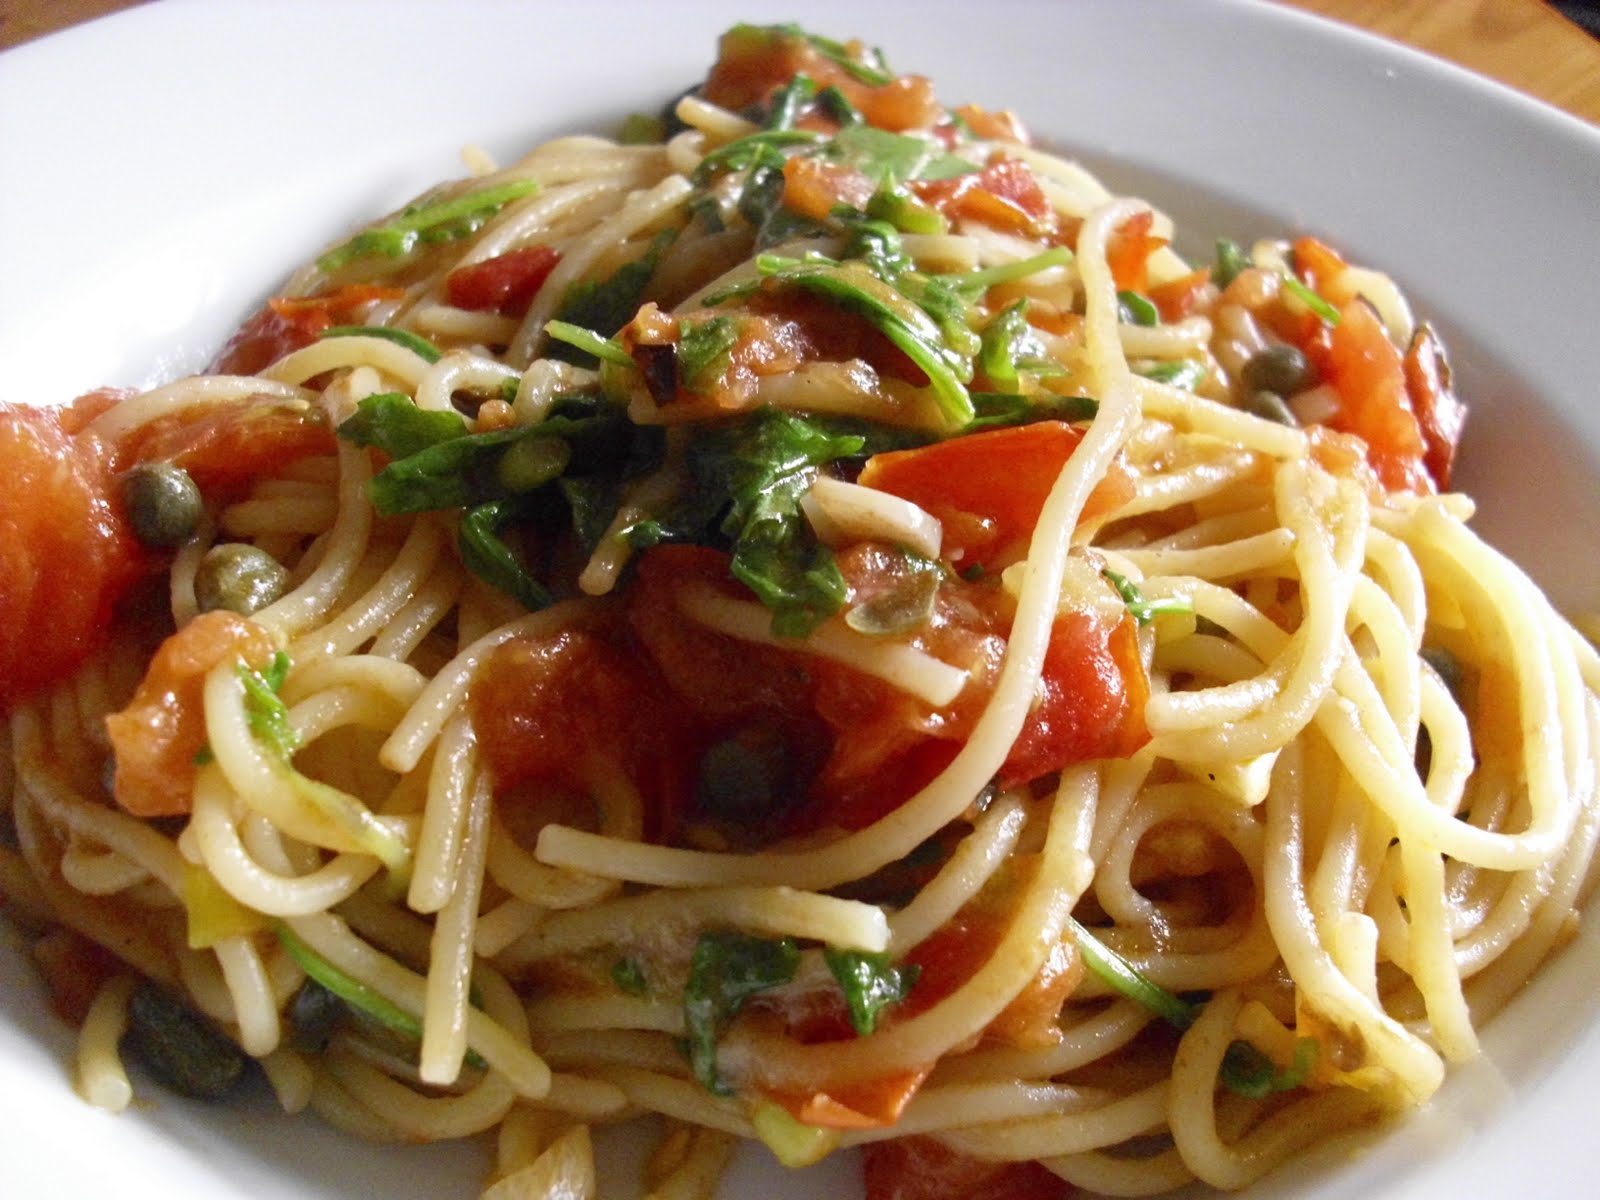 Katrins veggie life: Spaghetti mit Rucola, Tomaten und Kapern